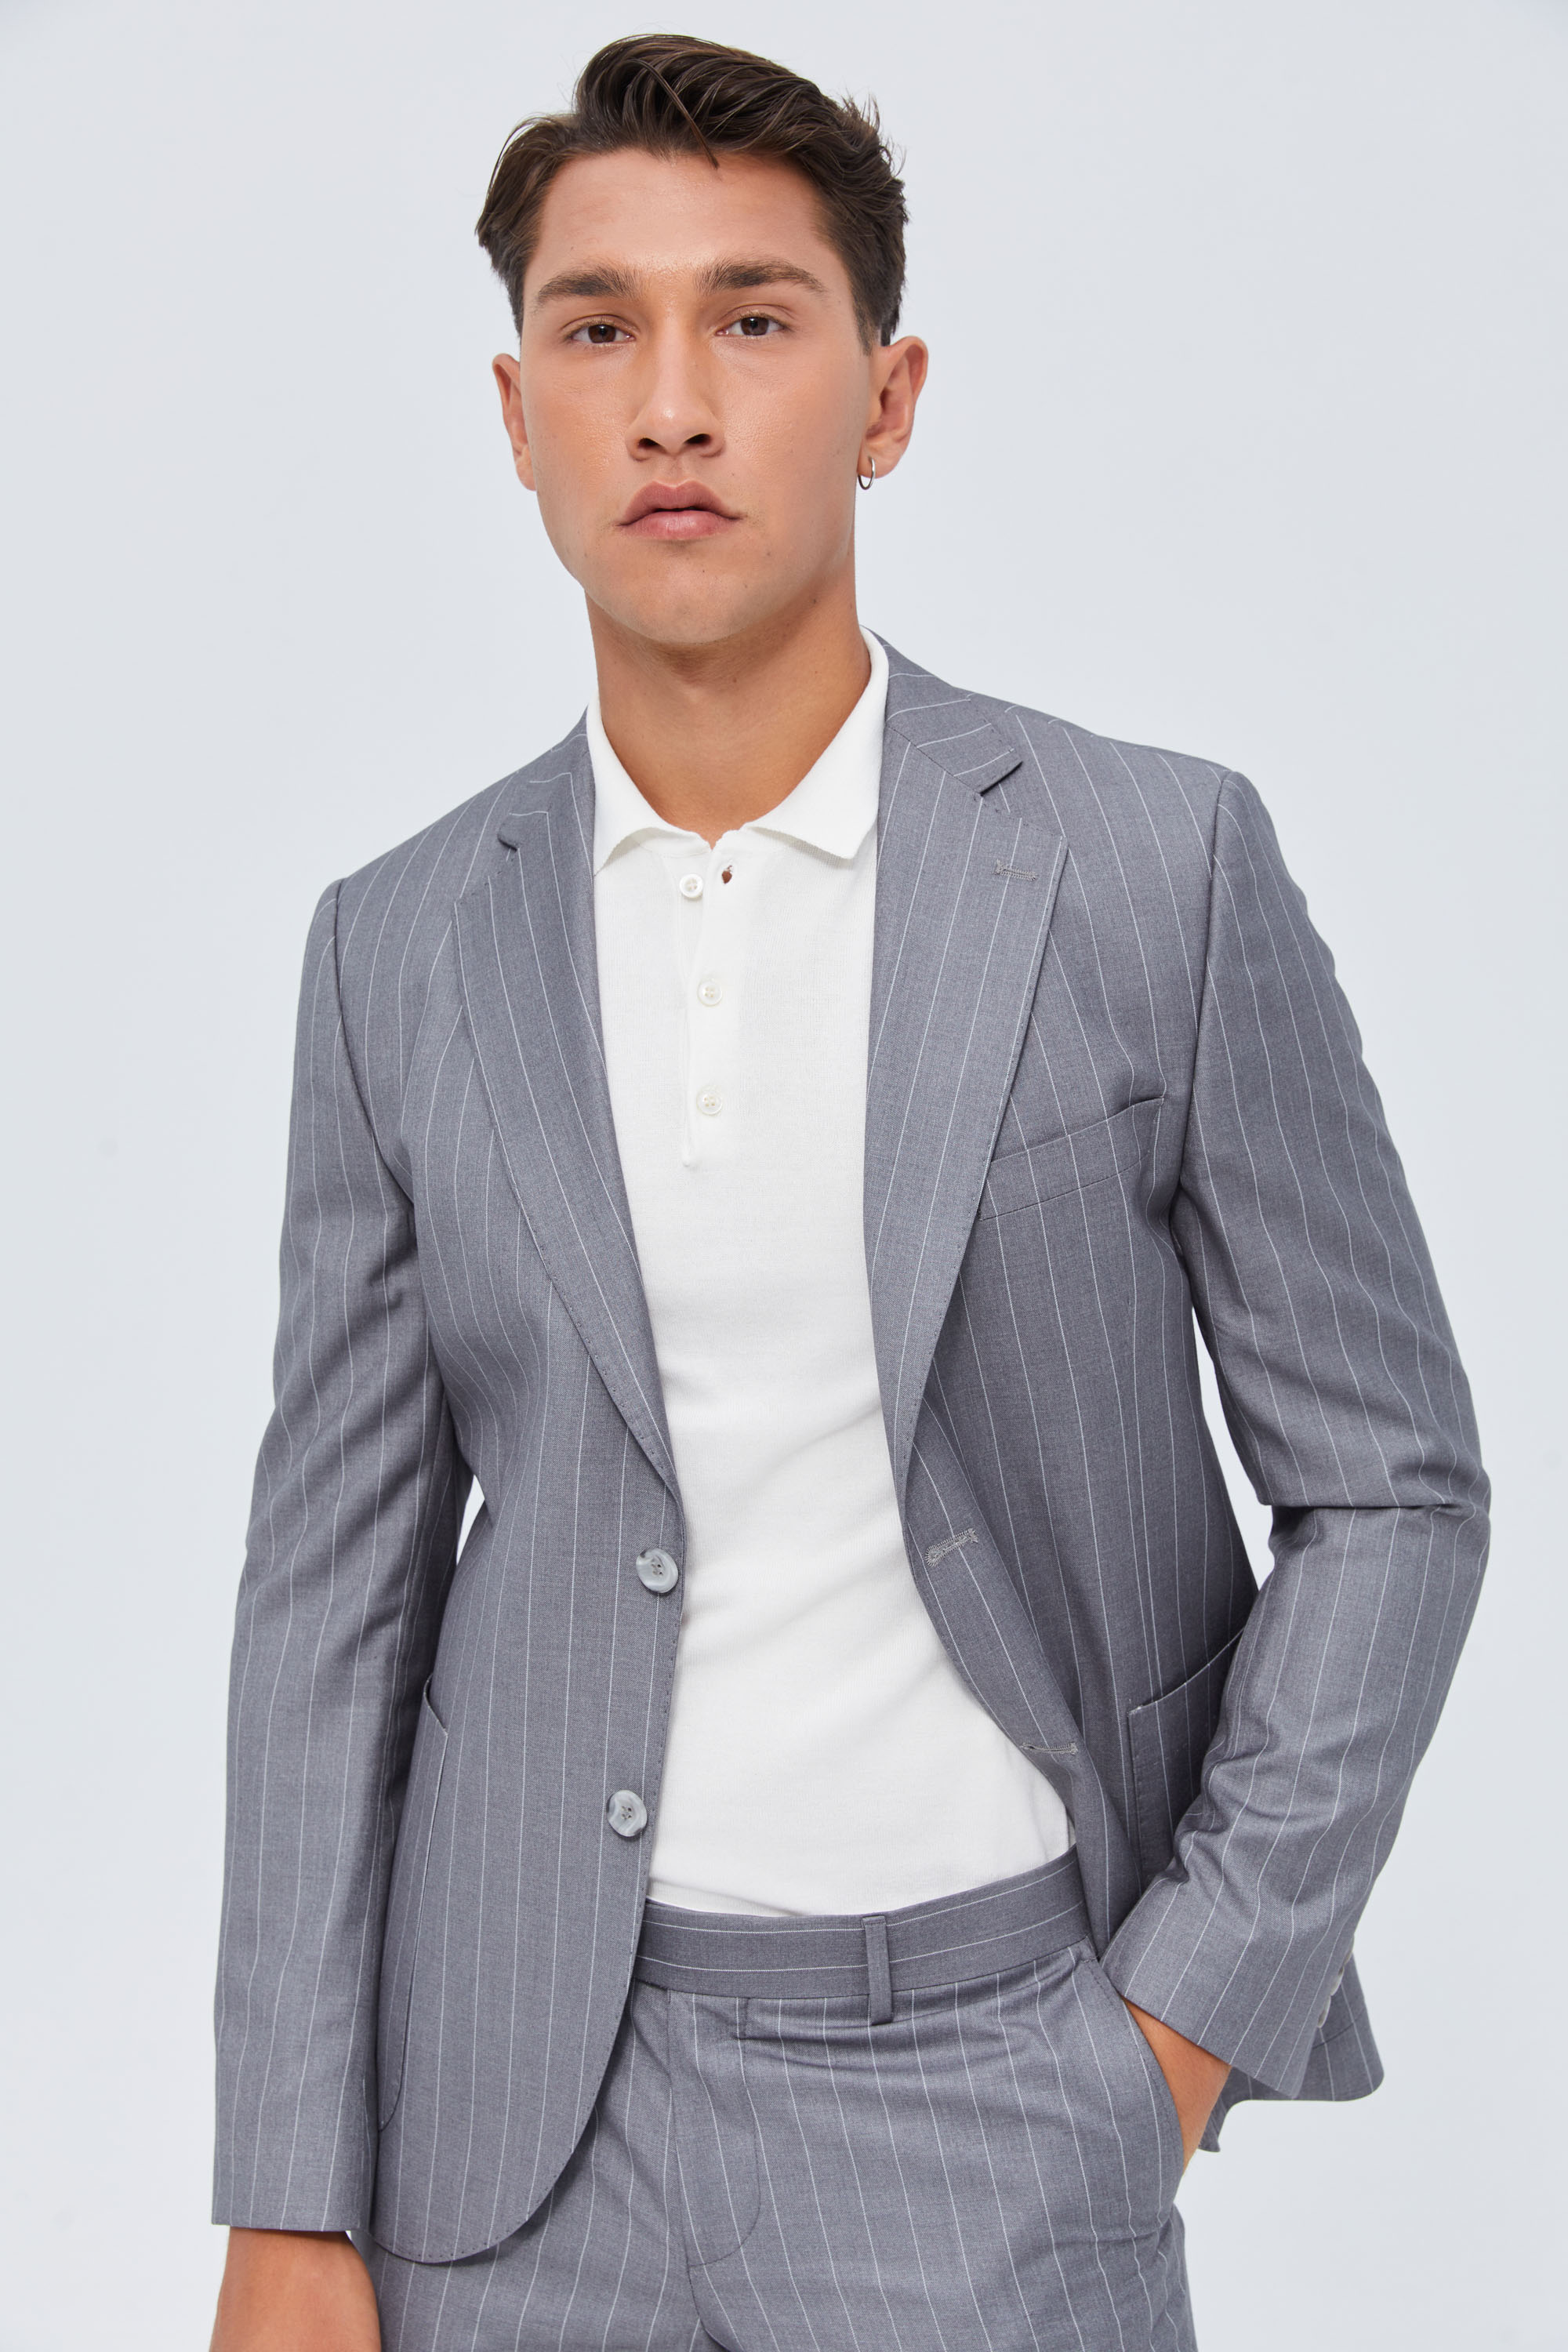 Men's Grey Vertical Striped Suit, Grey Waistcoat, White Dress Shirt,  Burgundy Print Tie | Lookastic